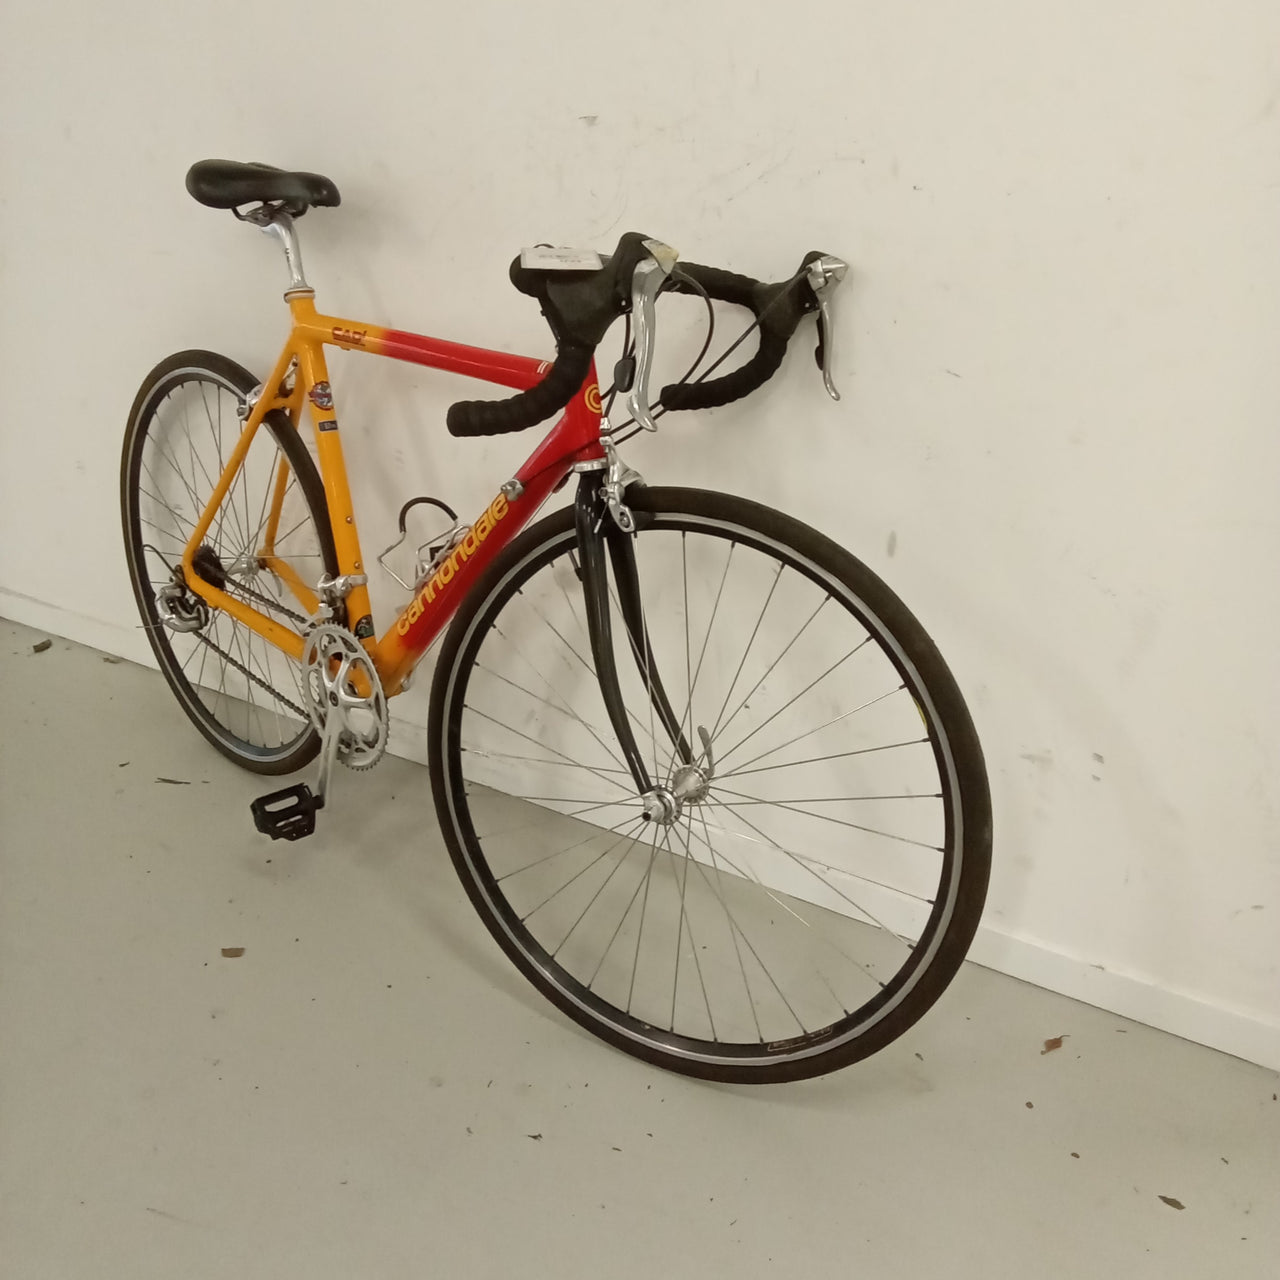 1703 - 52cm Yellow,
Red, Road Bike, Bike